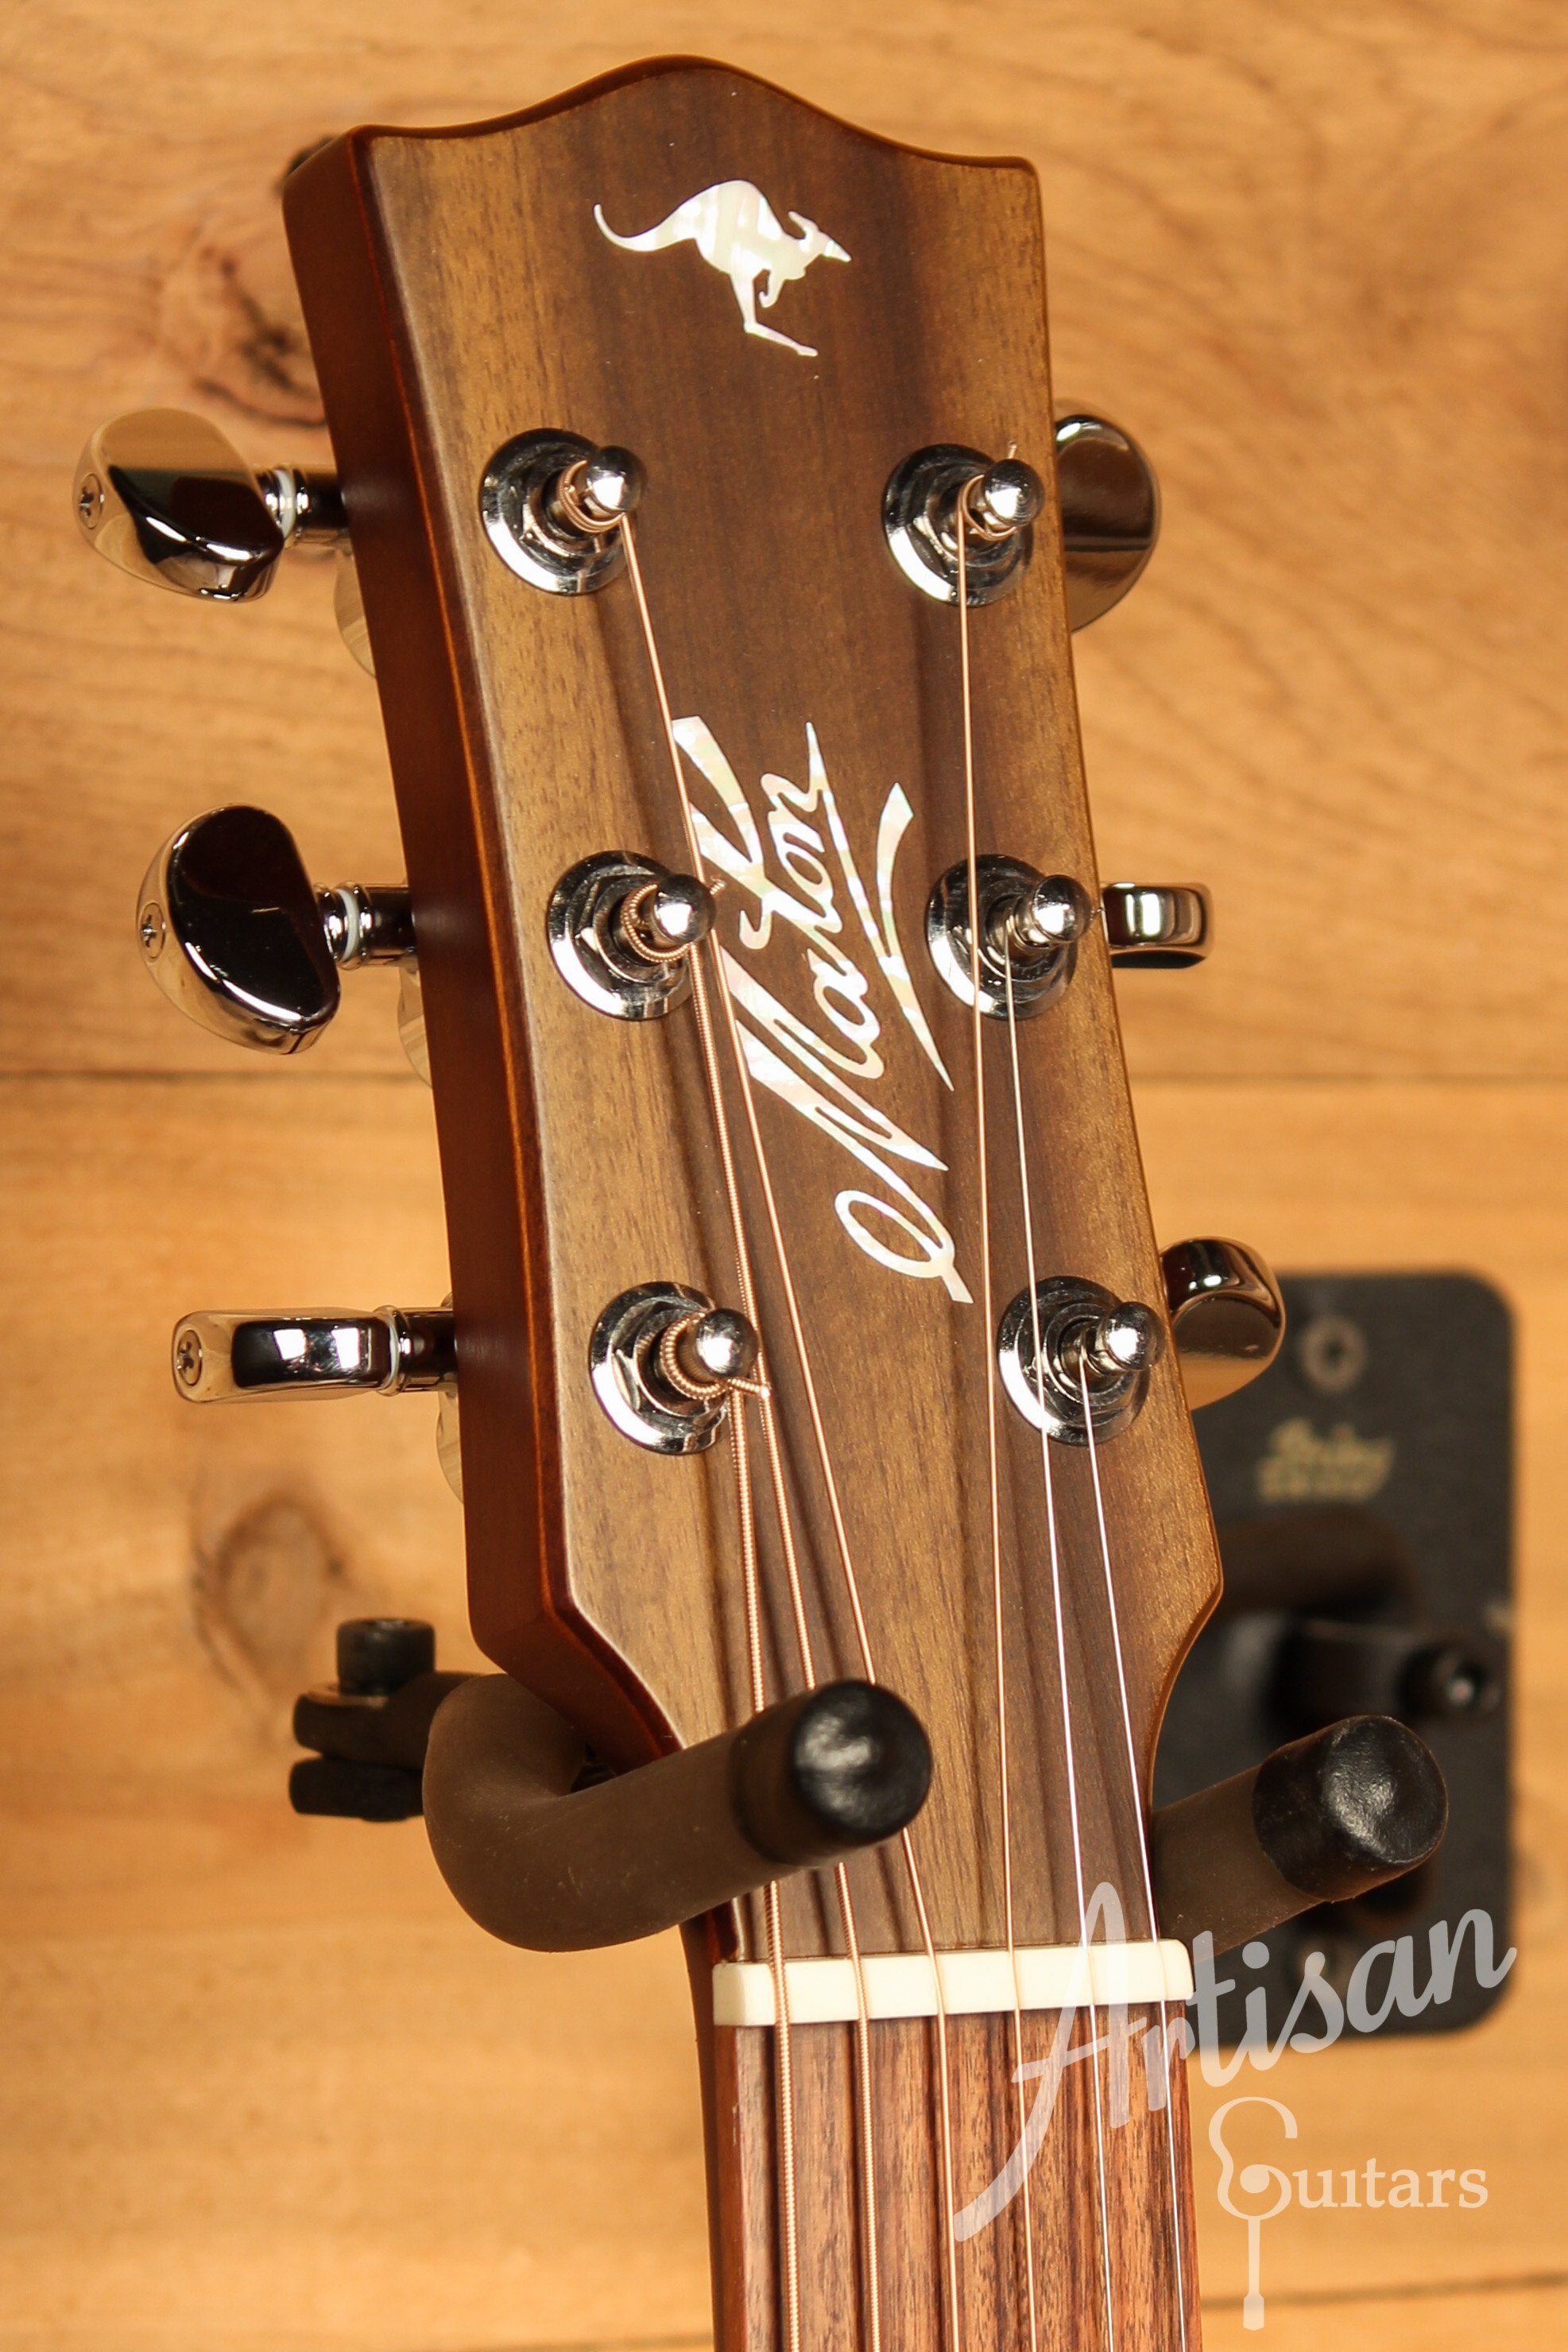 Maton EBG 808 TE Tommy Emmanuel Signature Guitar ID-12156 - Artisan Guitars